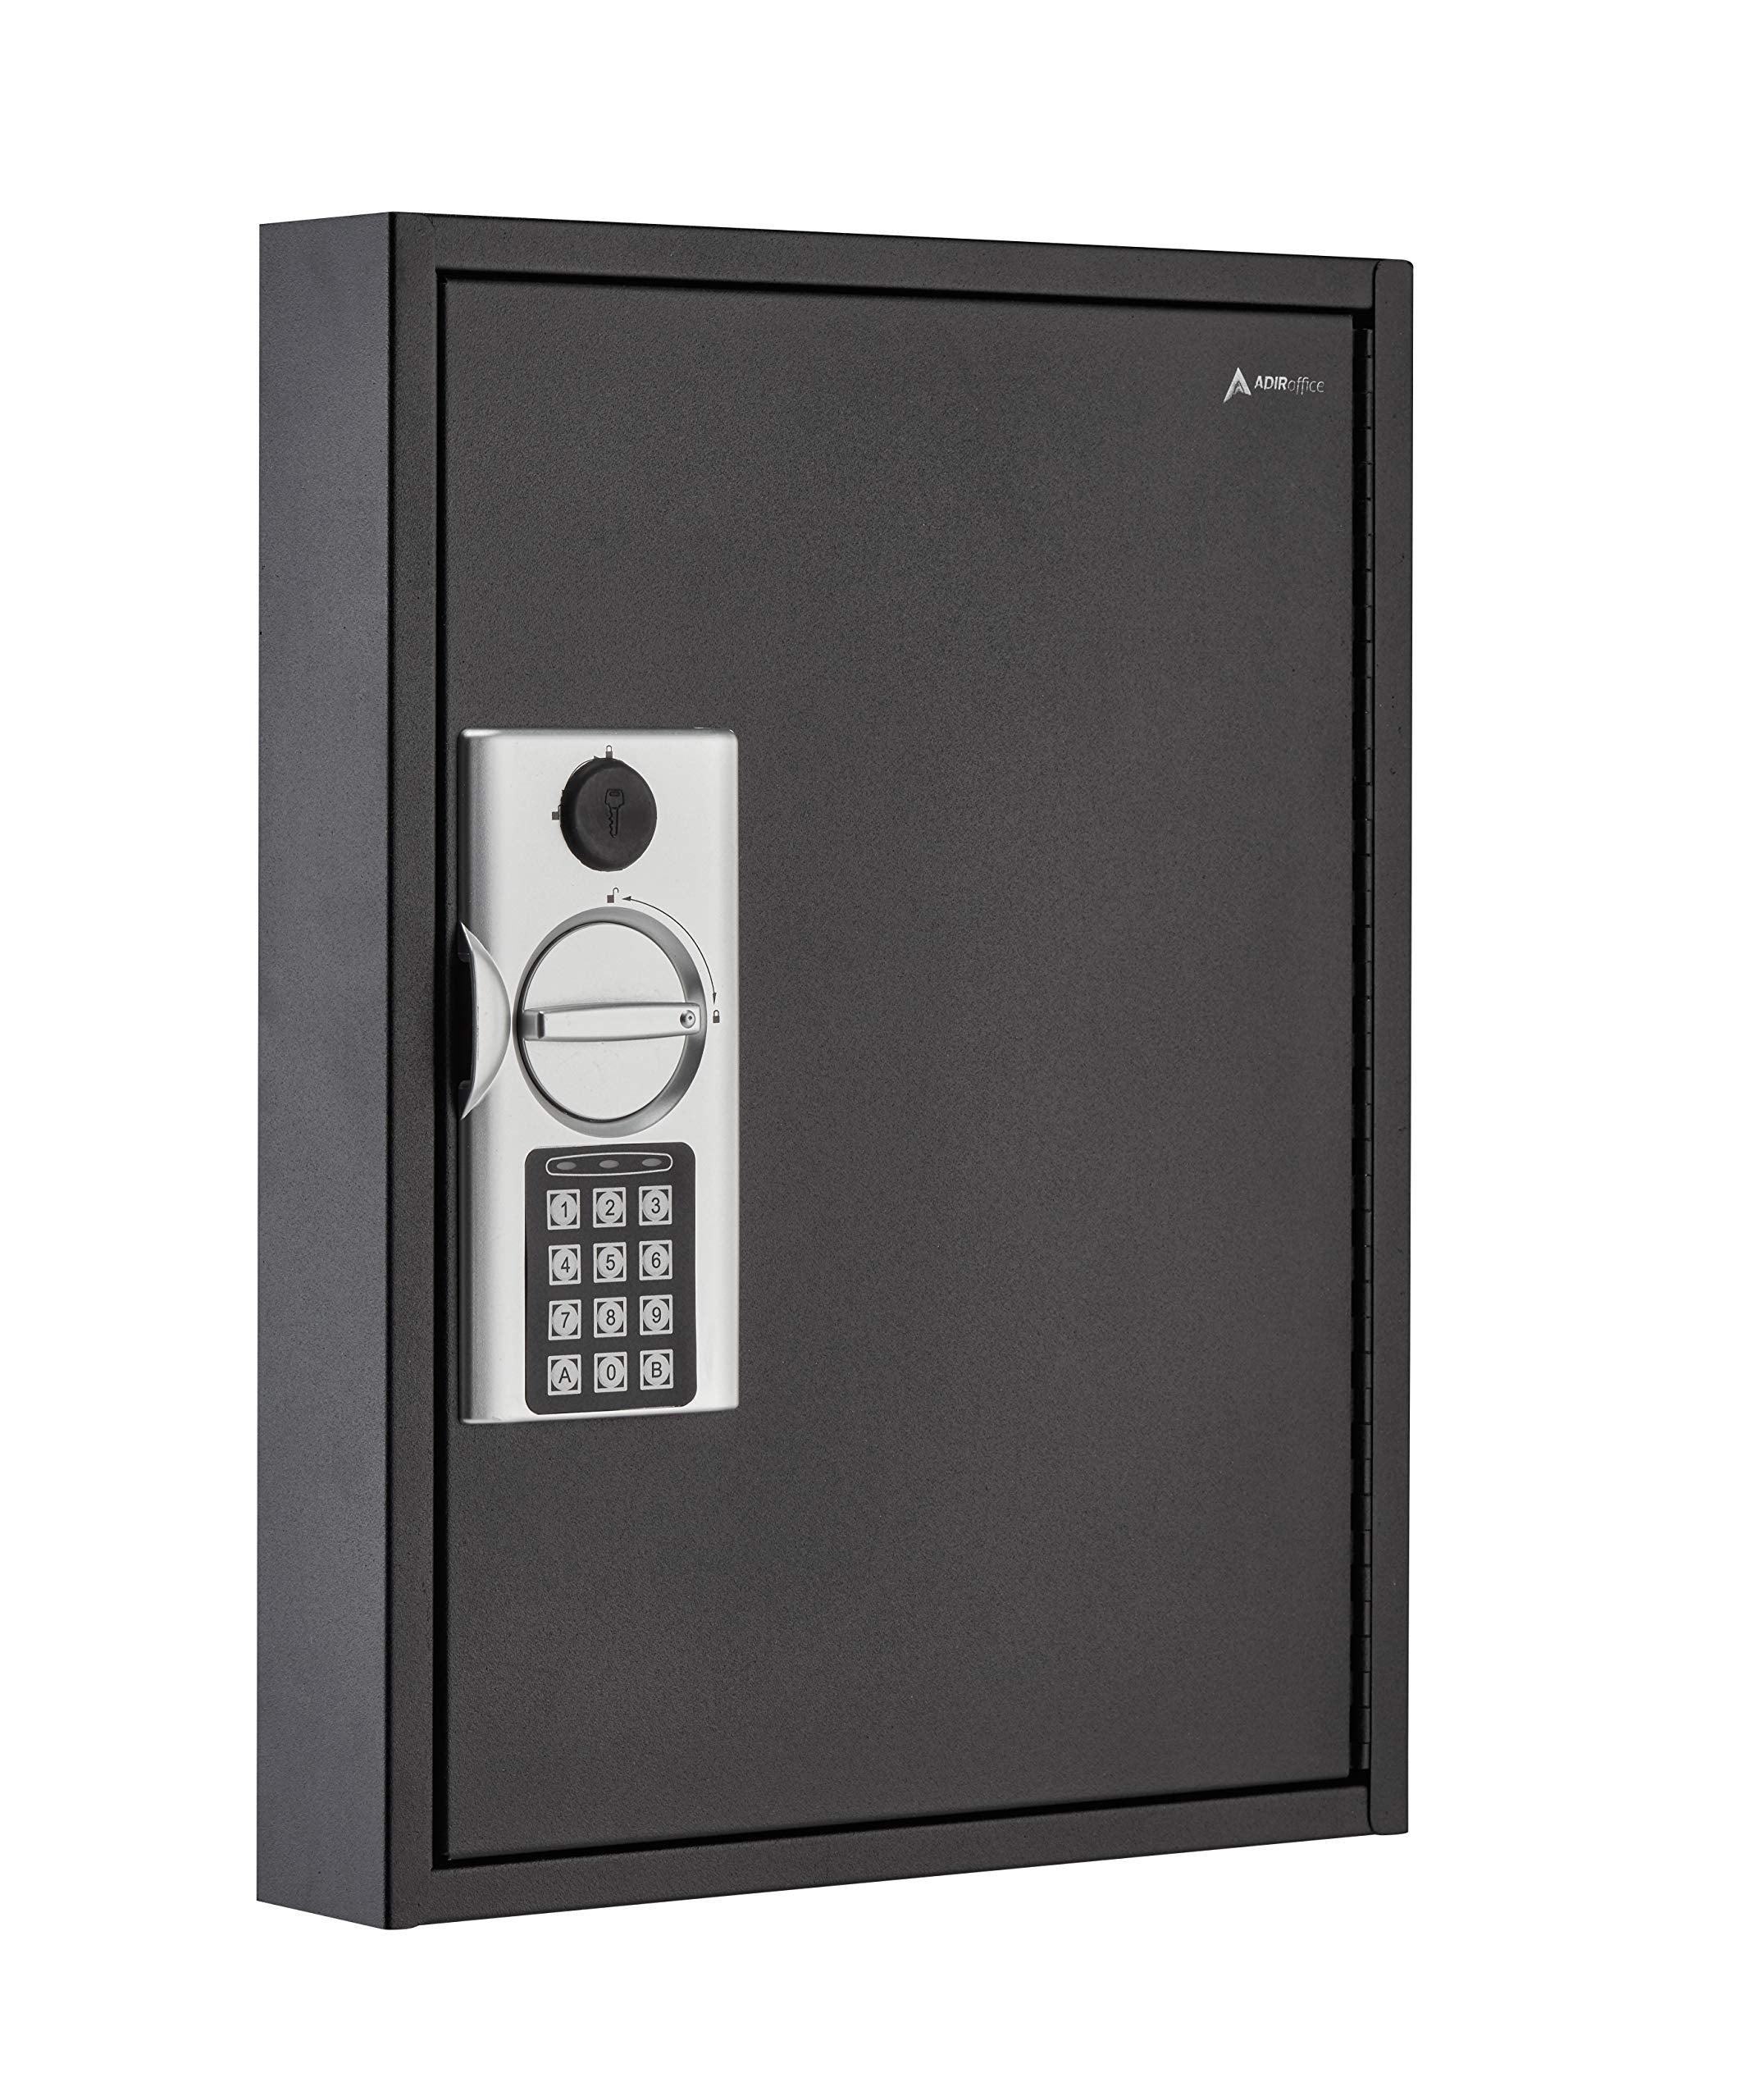 AdirOffice 60 Hooks Key Cabinet with Digital Lock - Heavy Duty Secured Storage, Steel- Ideal for Homes Hotels Schools & Businesses (Black)  - Very Good